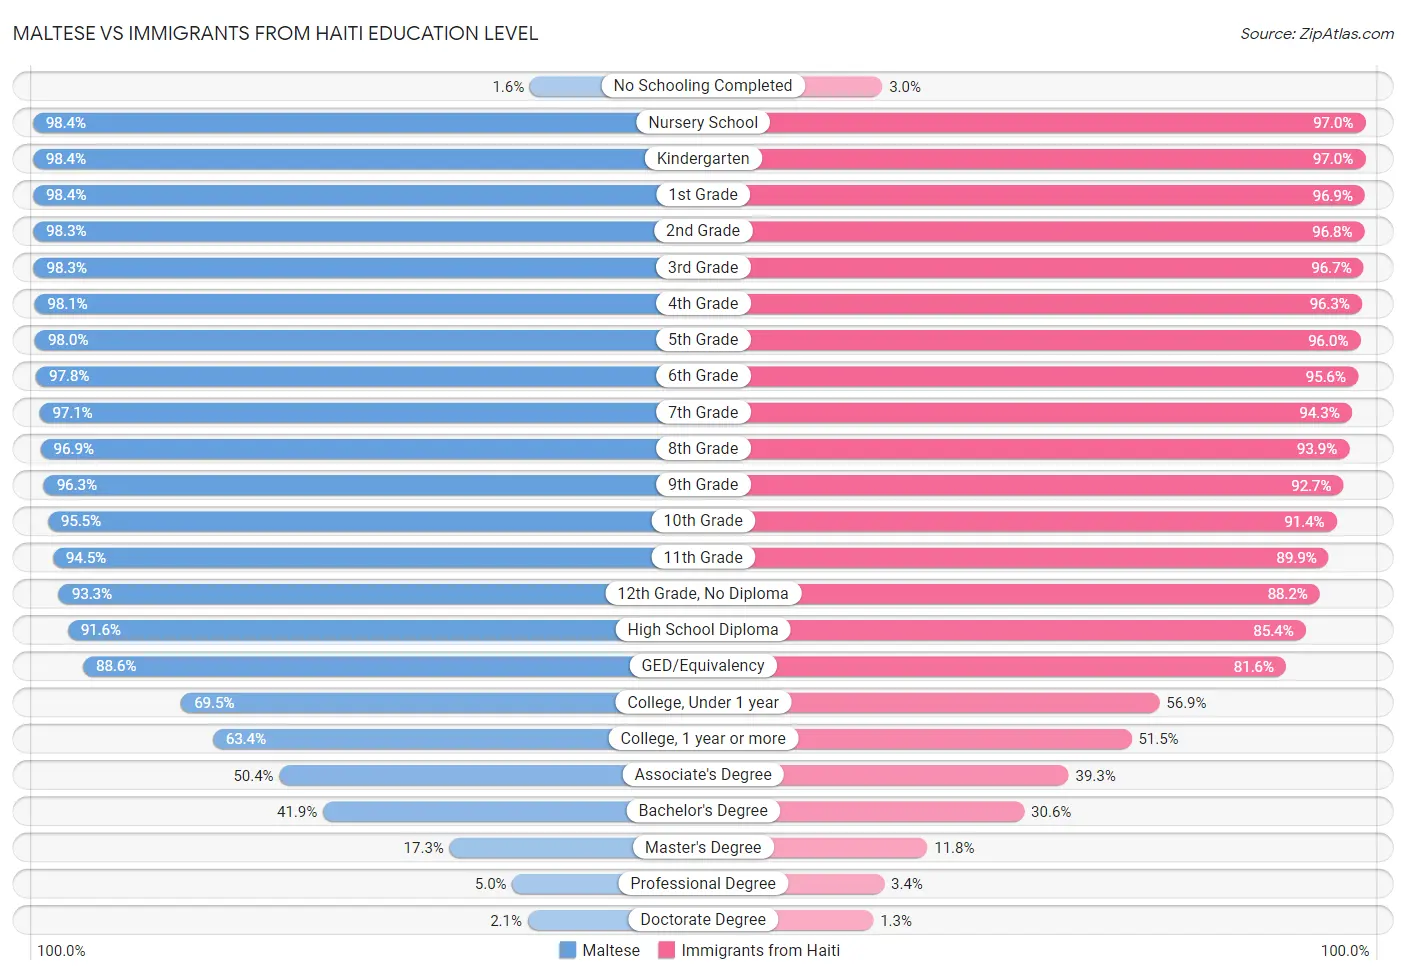 Maltese vs Immigrants from Haiti Education Level